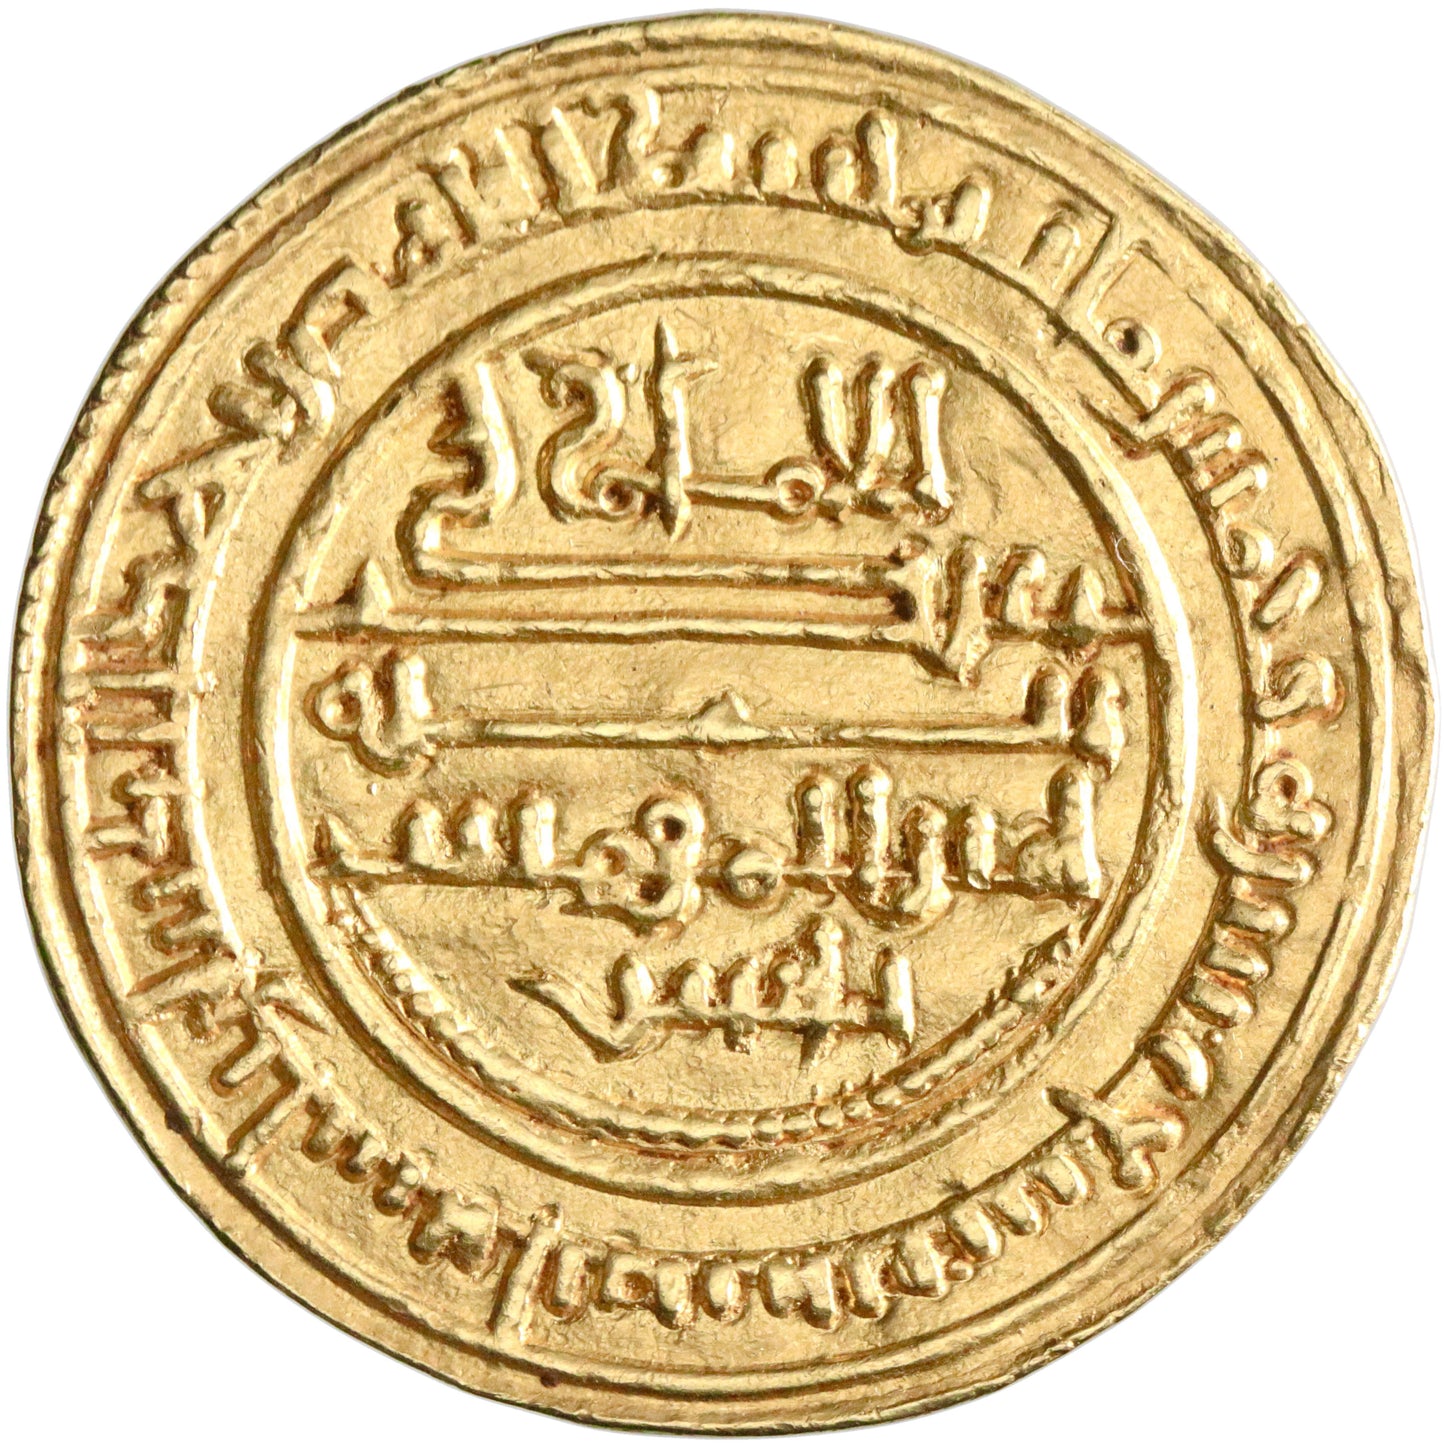 Almoravid, 'Ali ibn Yusuf ibn Tashfin, gold dinar, Ishbiliya (Seville, Spain) mint, AH 519, citing Yasir